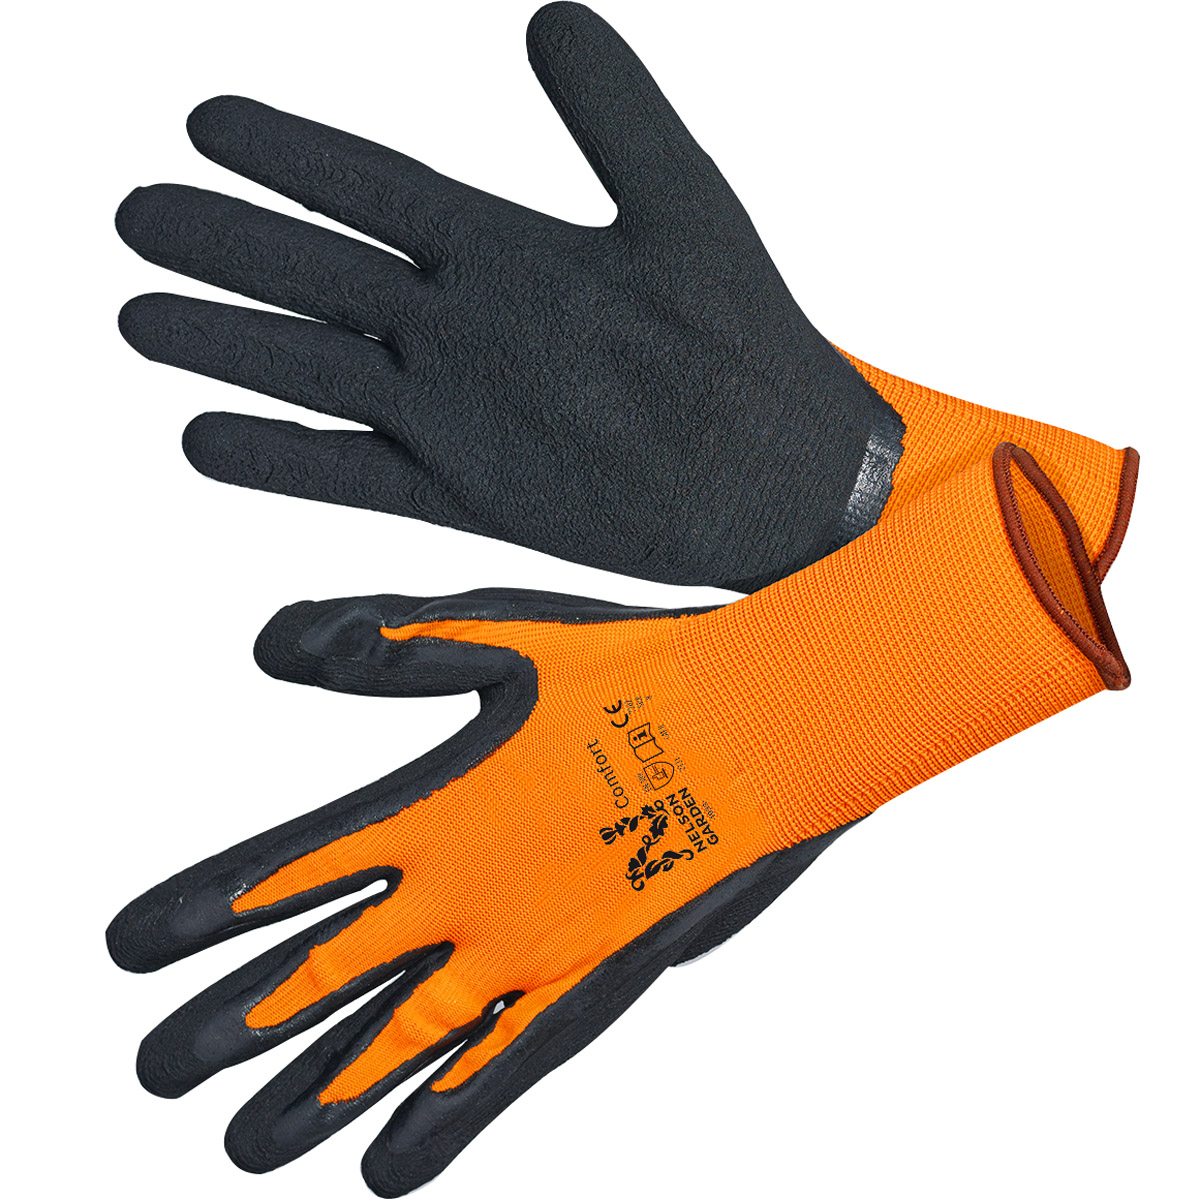 Handske Comfort, storlek 11 orange/svart